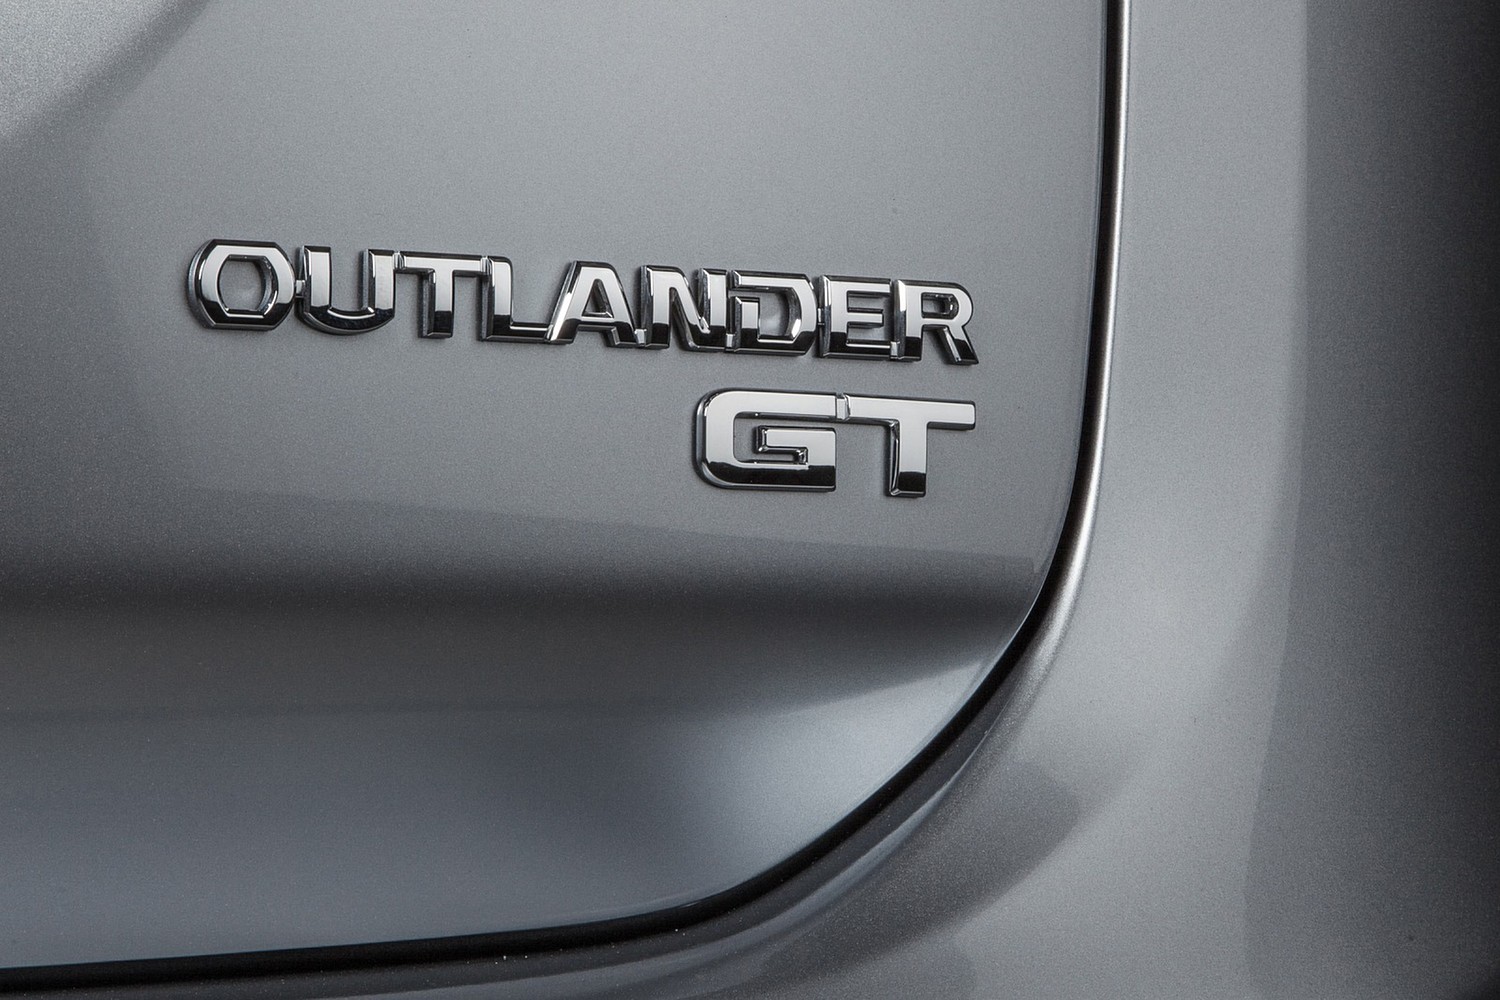 Mitsubishi Outlander GT 4dr SUV Rear Badge (2014 model year shown)